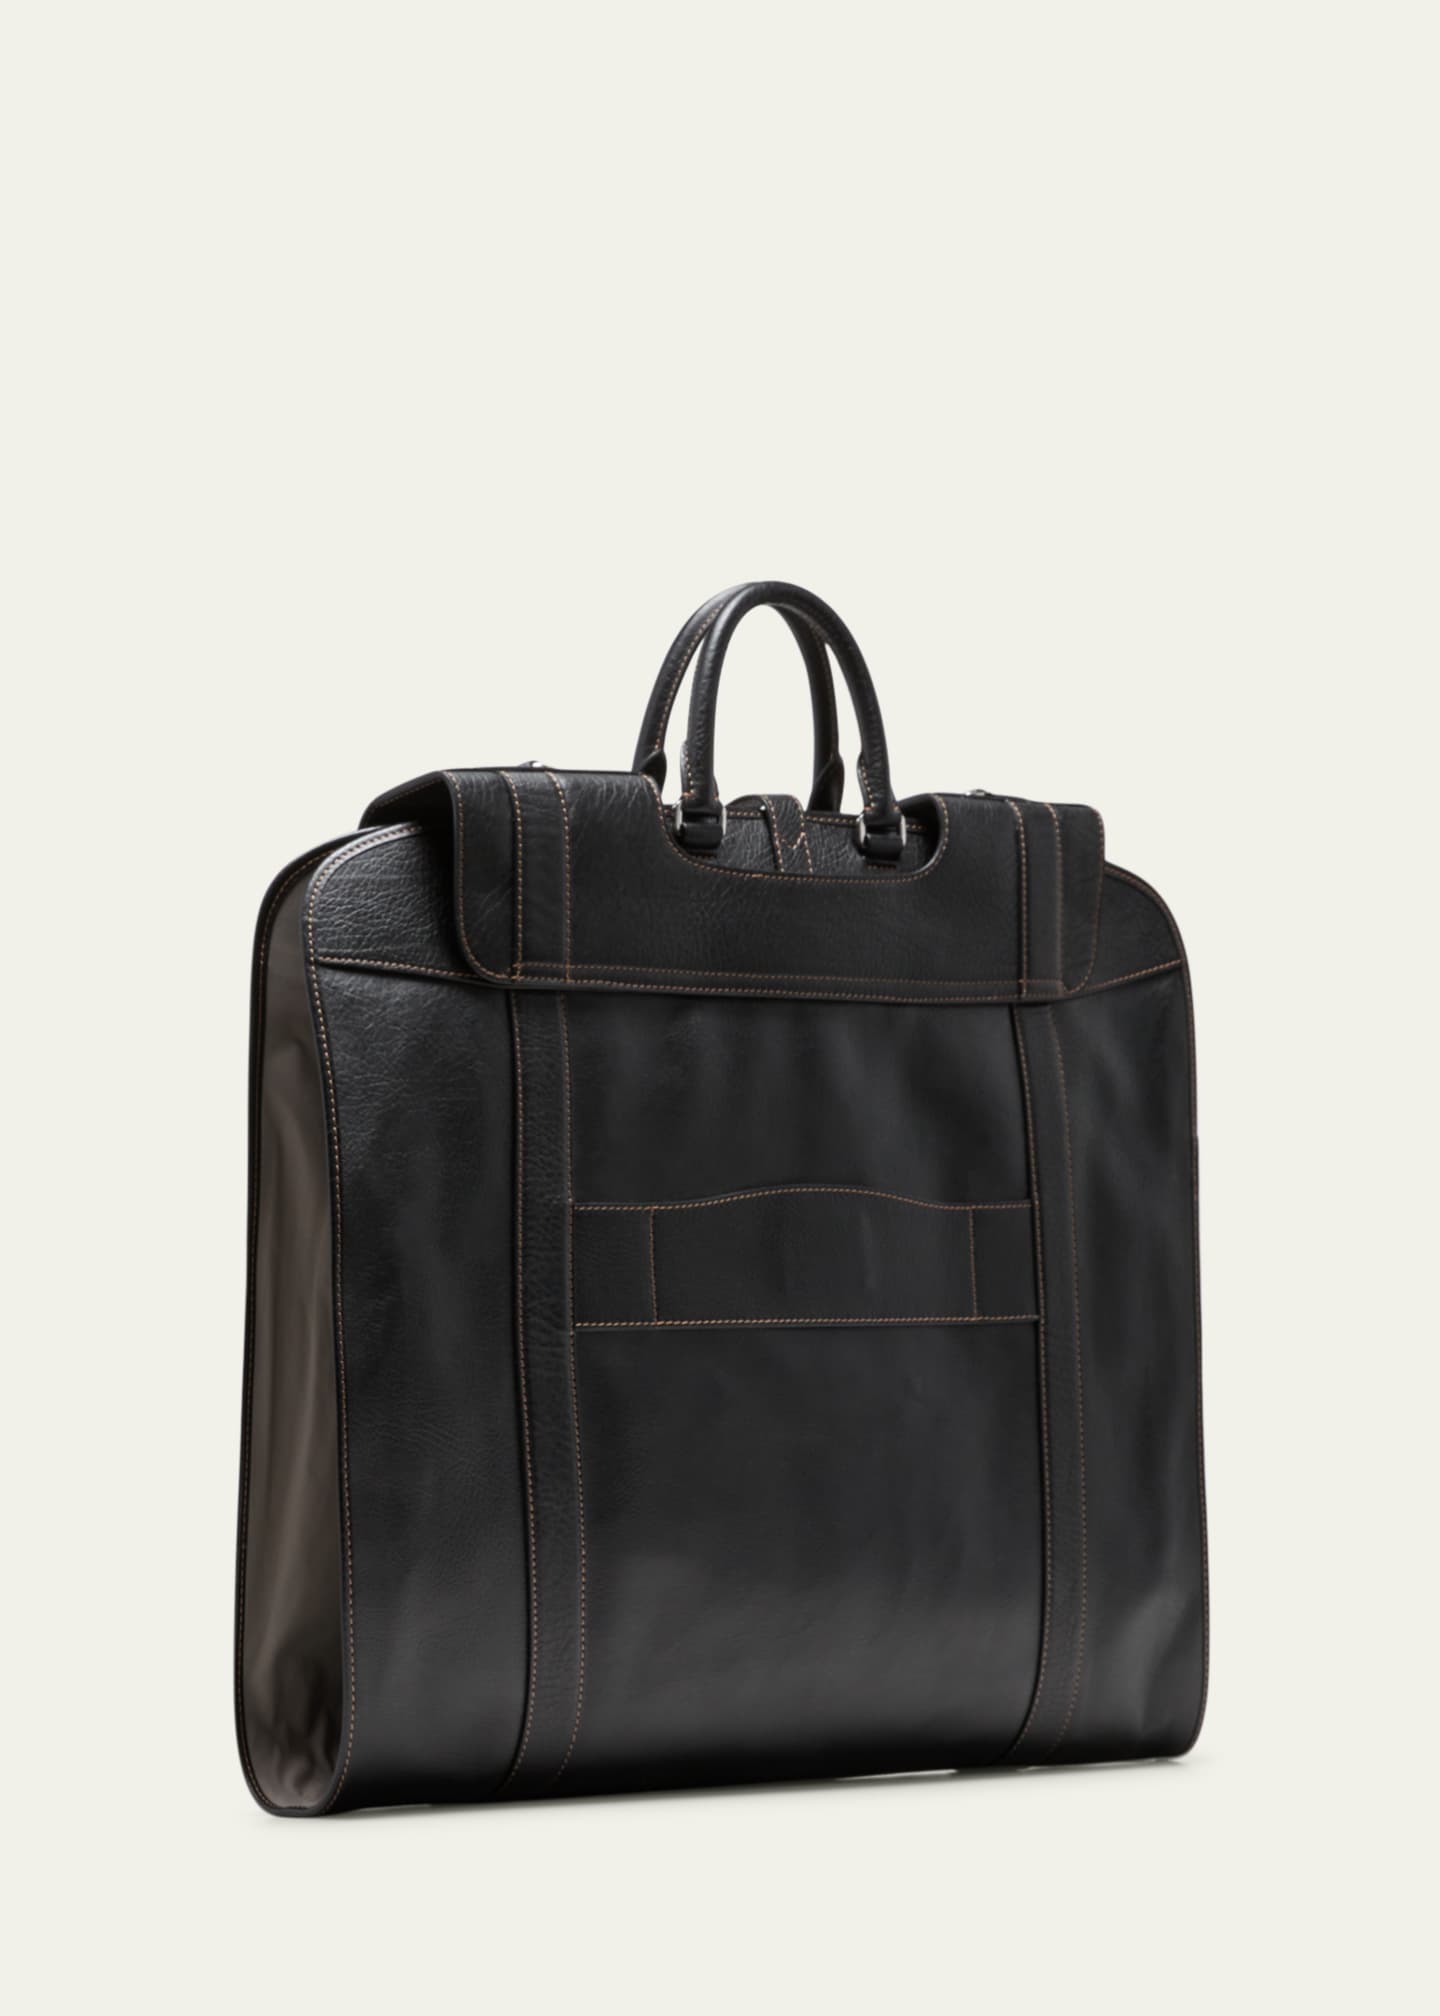 Brunello Cucinelli Men's Leather Garment Bag